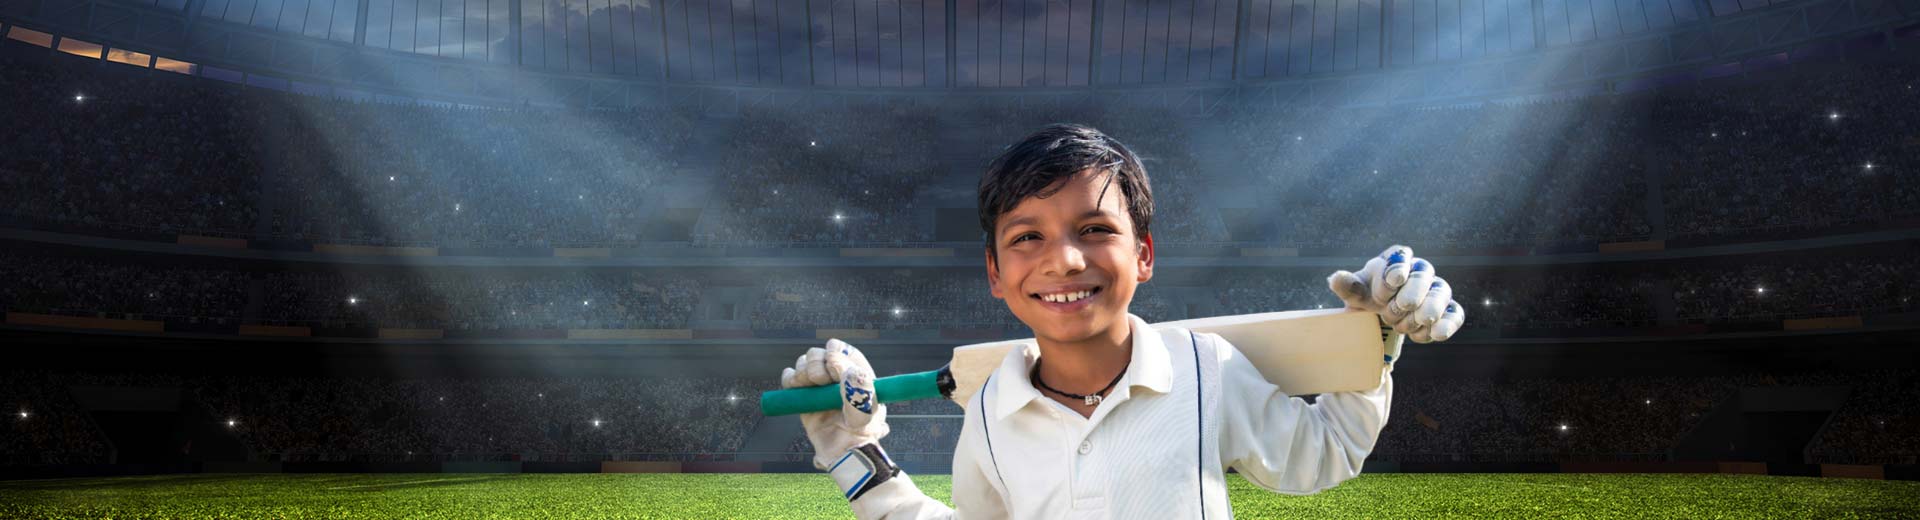 Junior Cricket Gloves Manufacturers in Pakistan